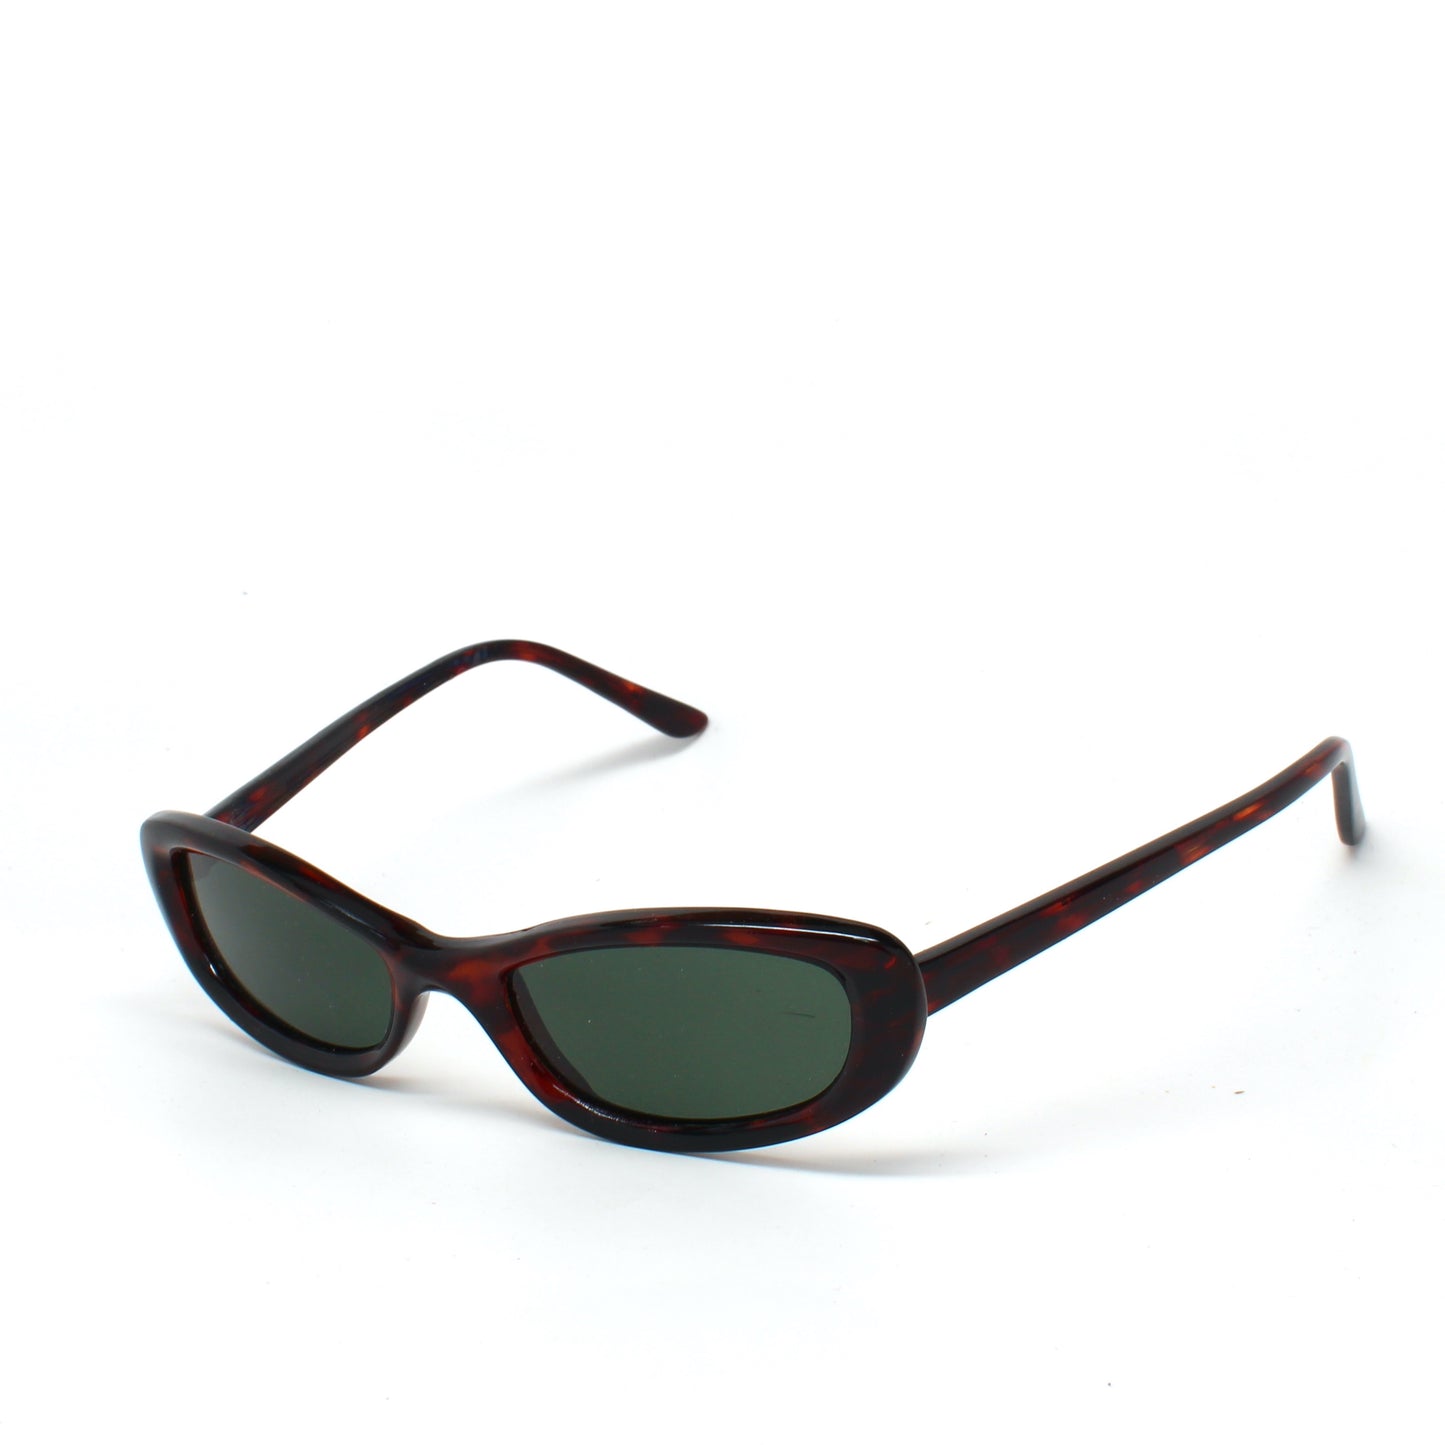 Vintage Small Sized 90s Mod Slim Narrow Rectangle Shape Sunglasses - Tortoise